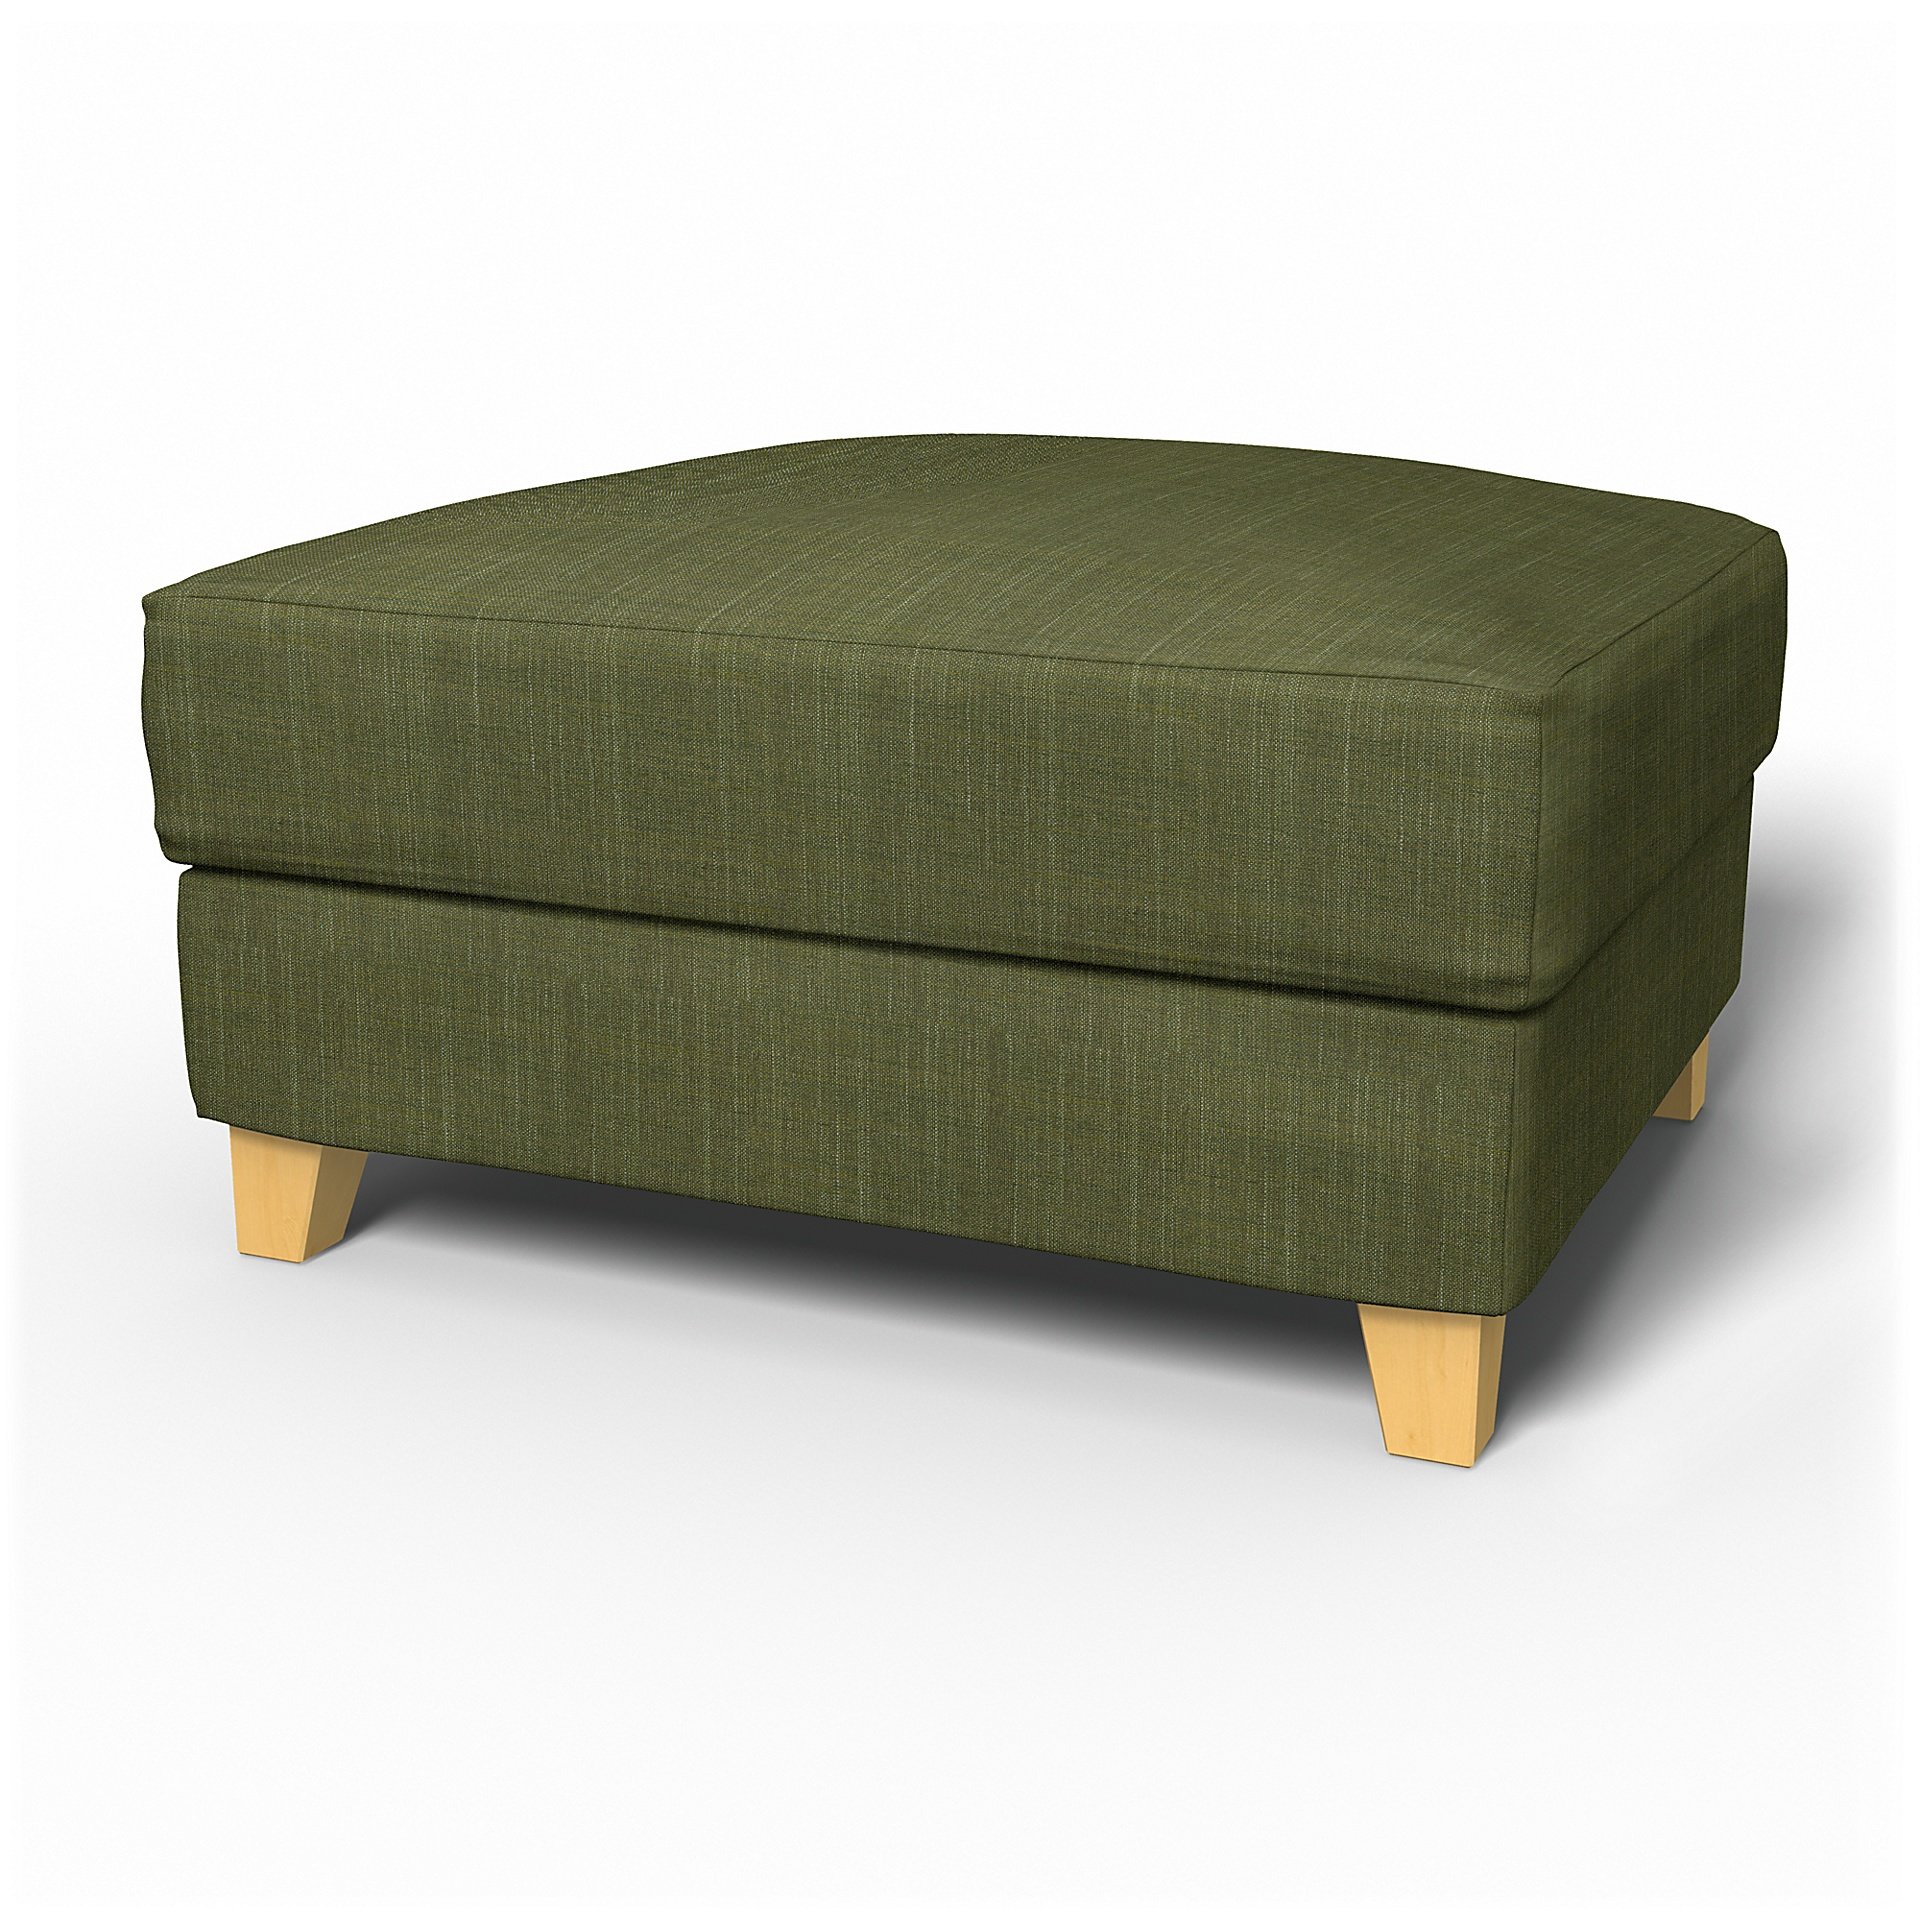 IKEA - Backa Footstool Cover, Moss Green, Boucle & Texture - Bemz